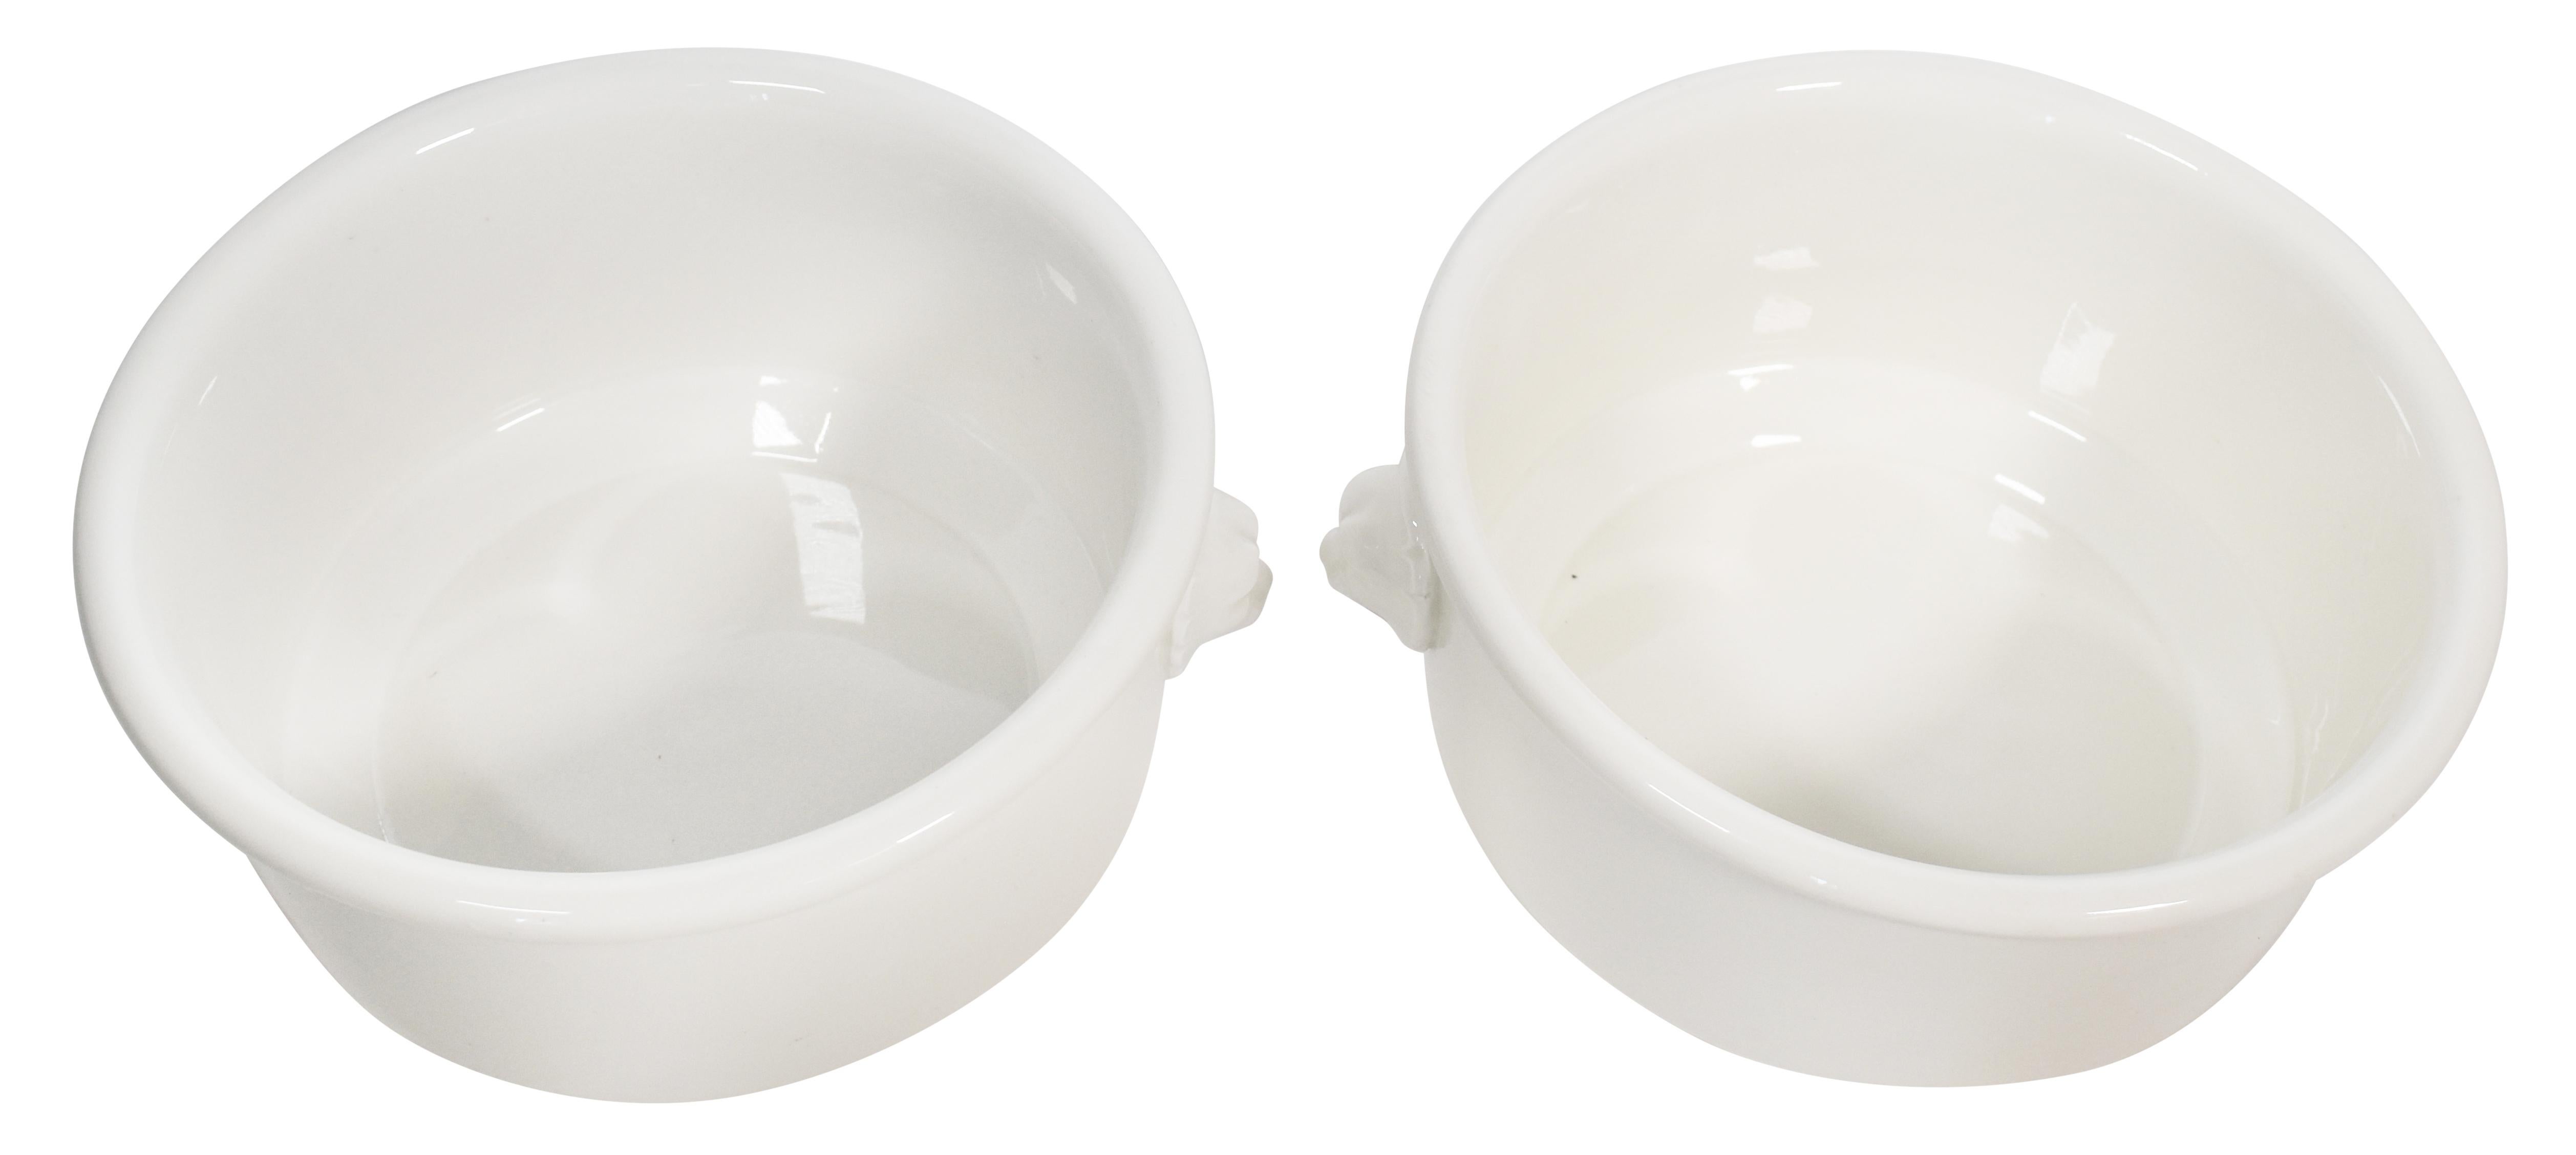 Pair of large unusual vintage European French Pillivuyt porcelain bowls with lion head handles.
 